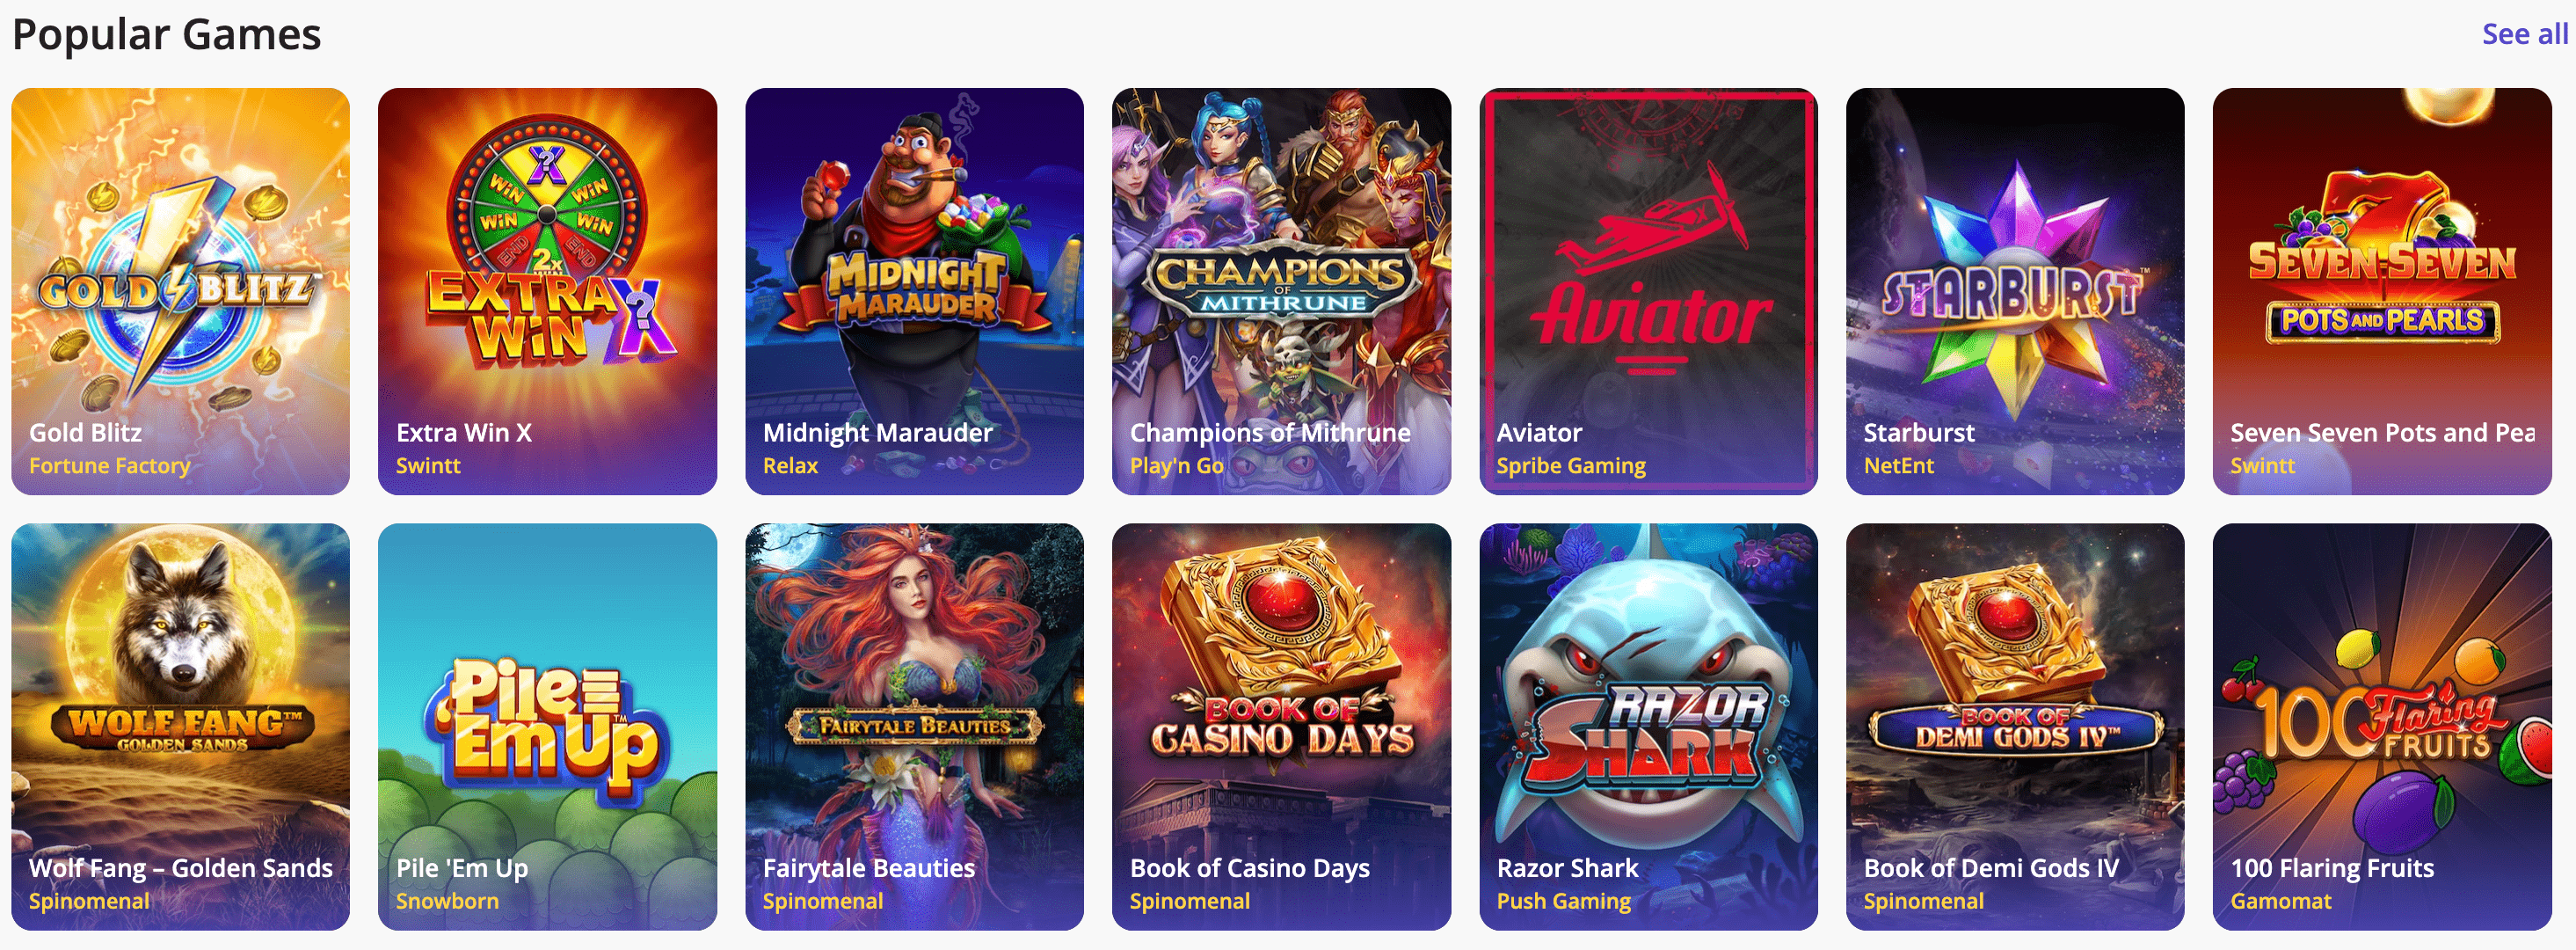 CasinoDays Games